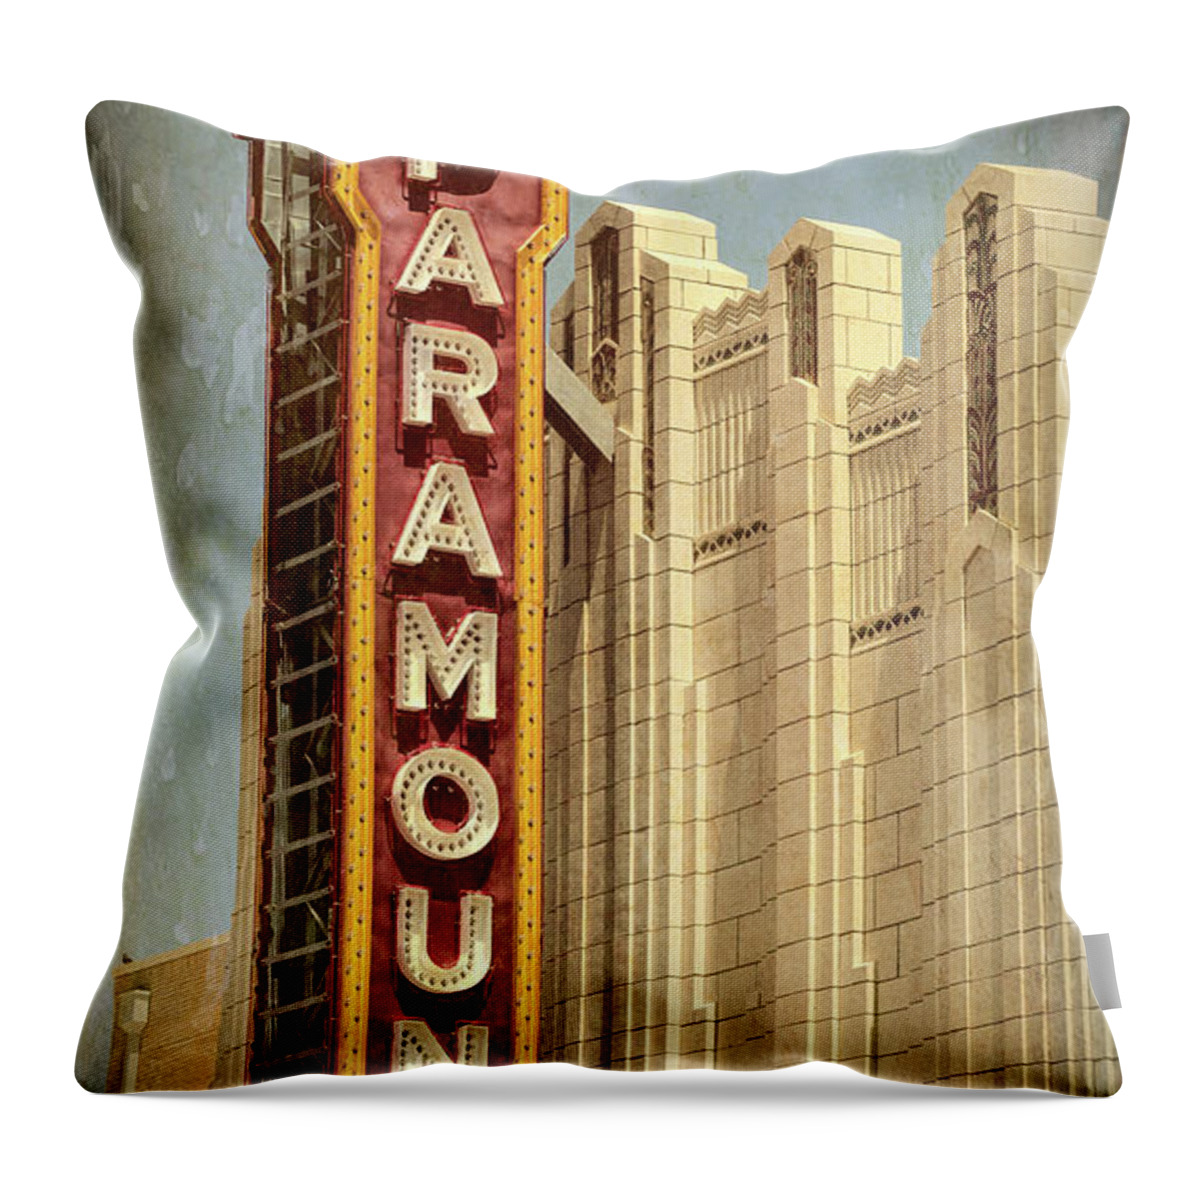 Amarillo Throw Pillow featuring the photograph Amarillo Paramount Theatre - #2 by Stephen Stookey